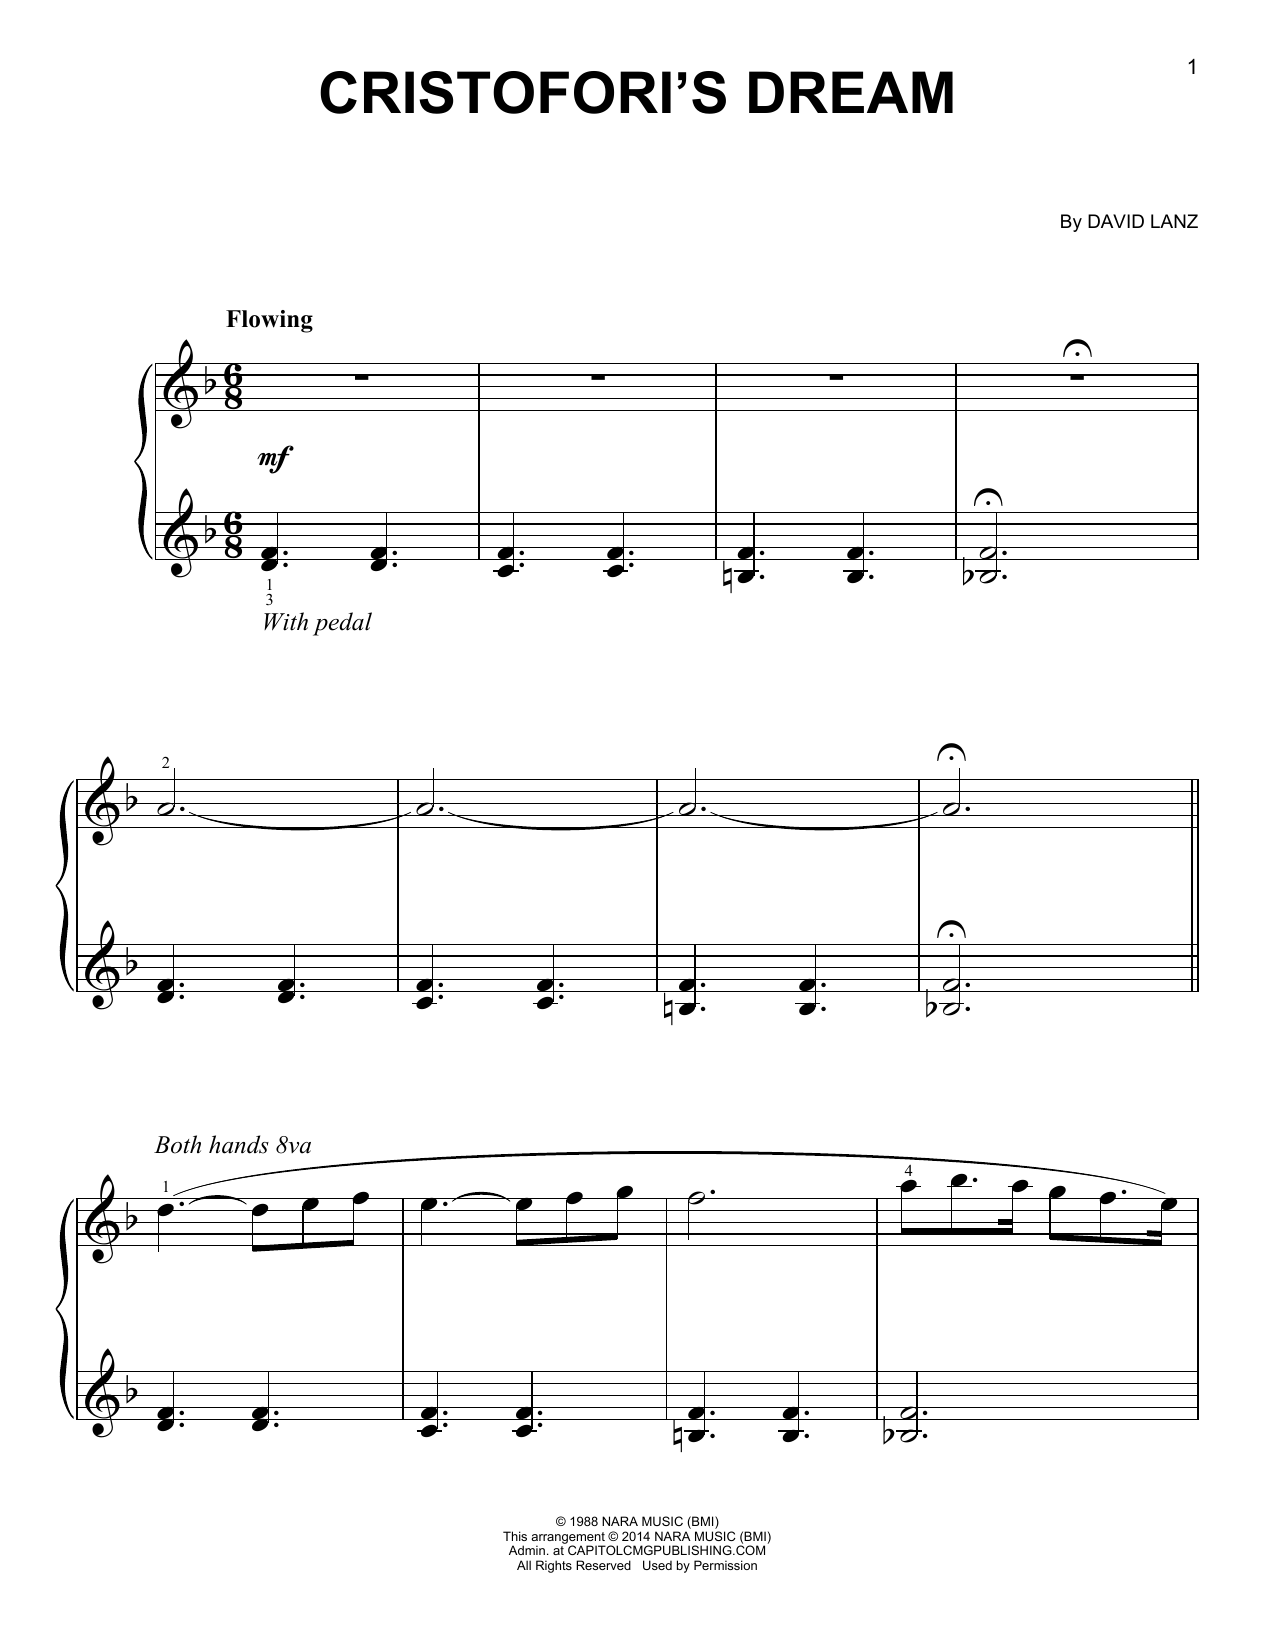 David Lanz Cristofori's Dream Sheet Music Notes & Chords for Piano - Download or Print PDF